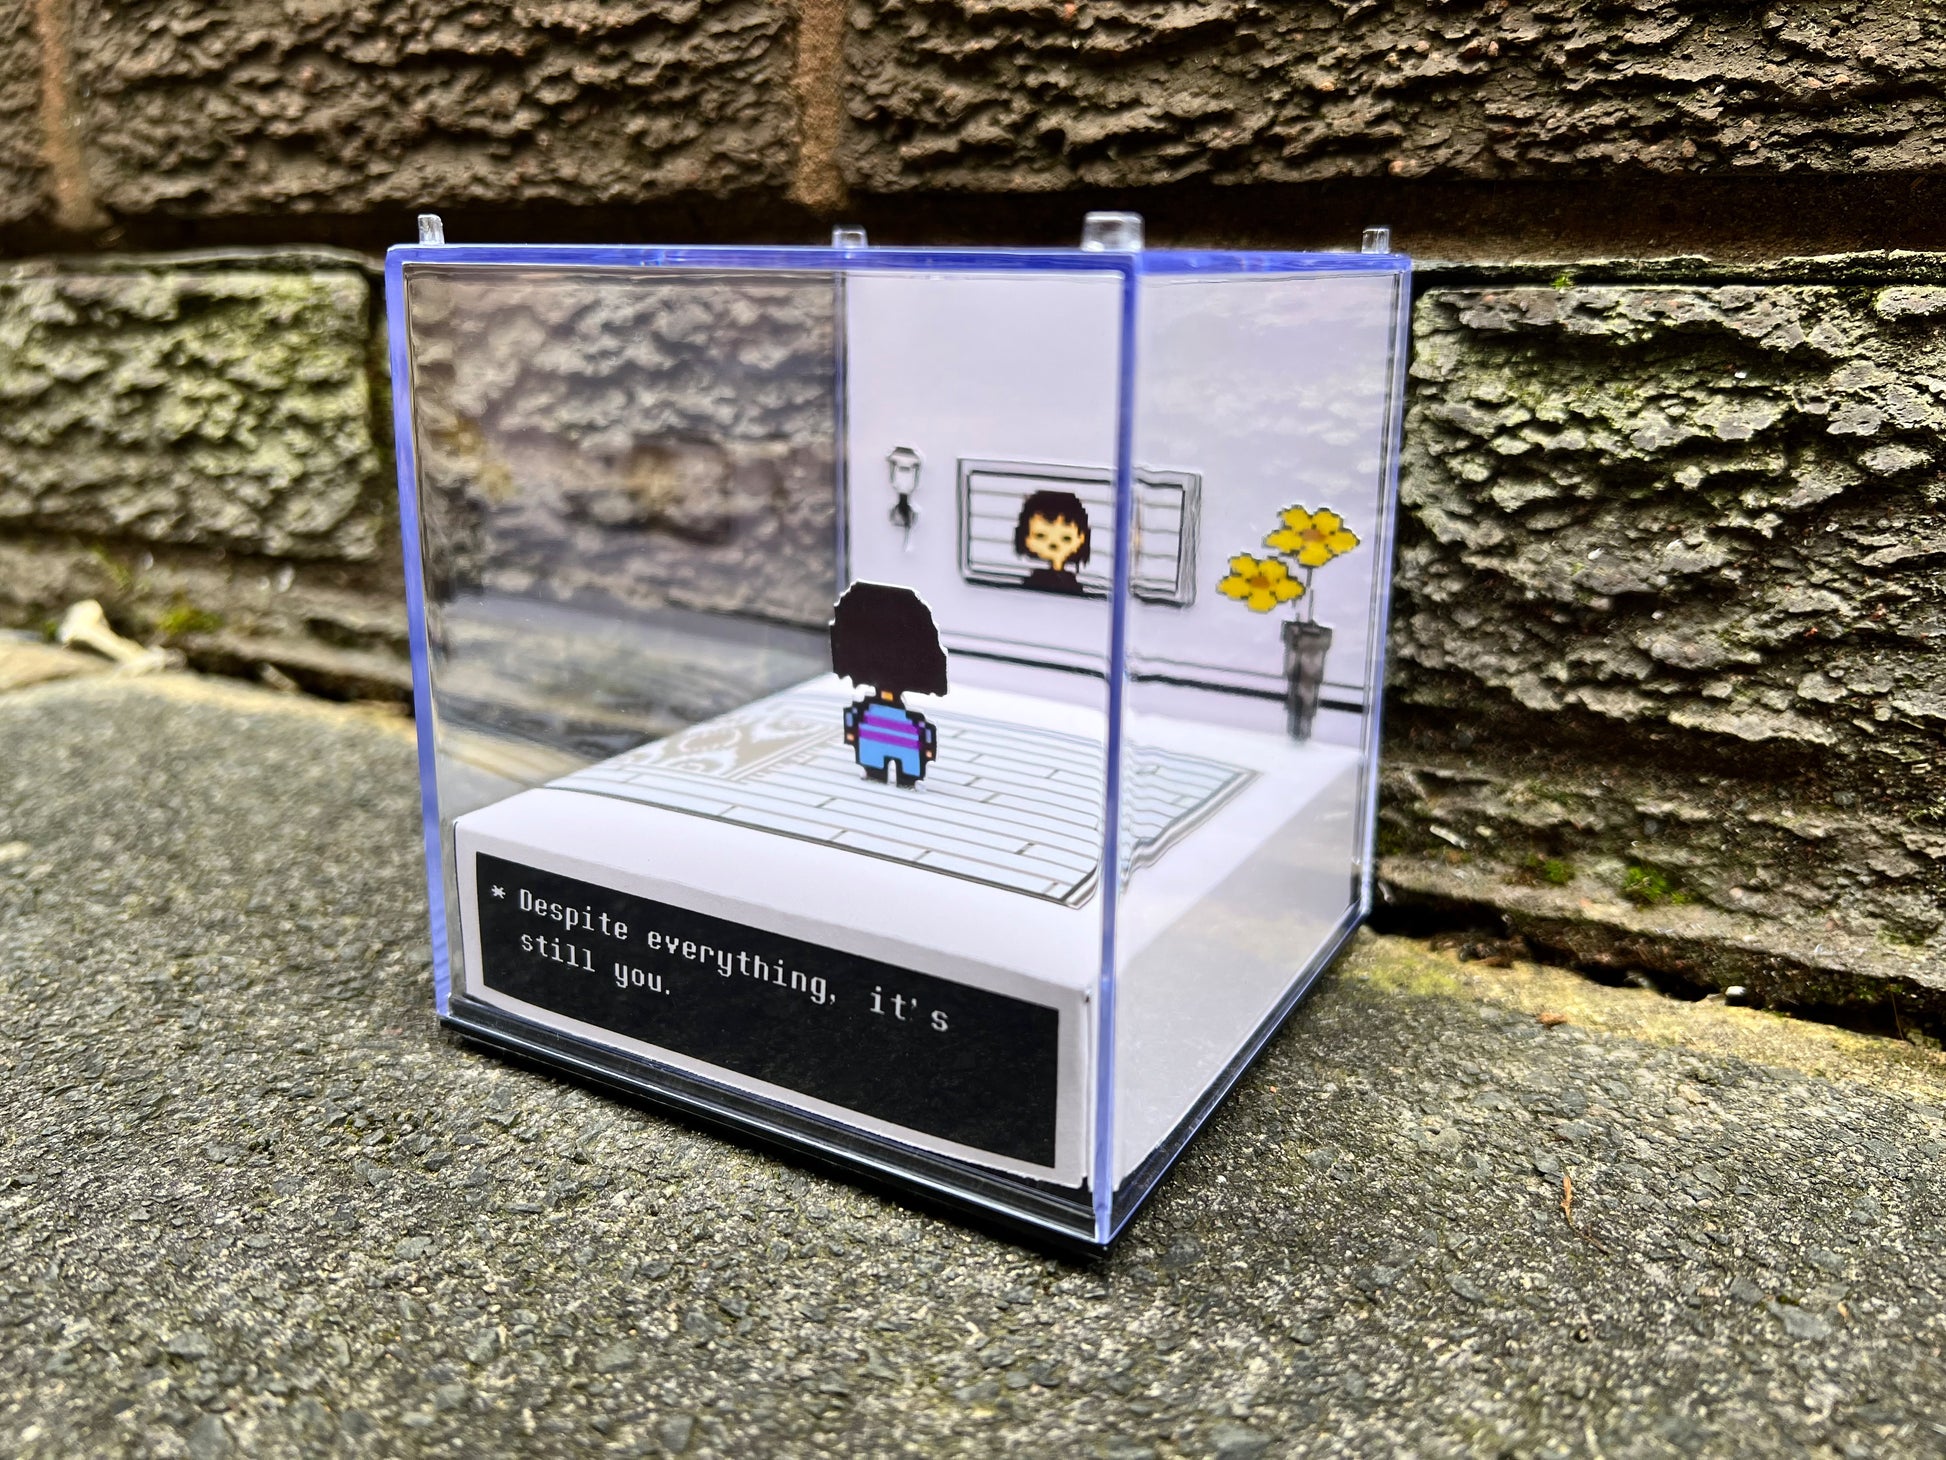 Undertale Despite Everything Handmade Diorama - Retro Gaming Cube